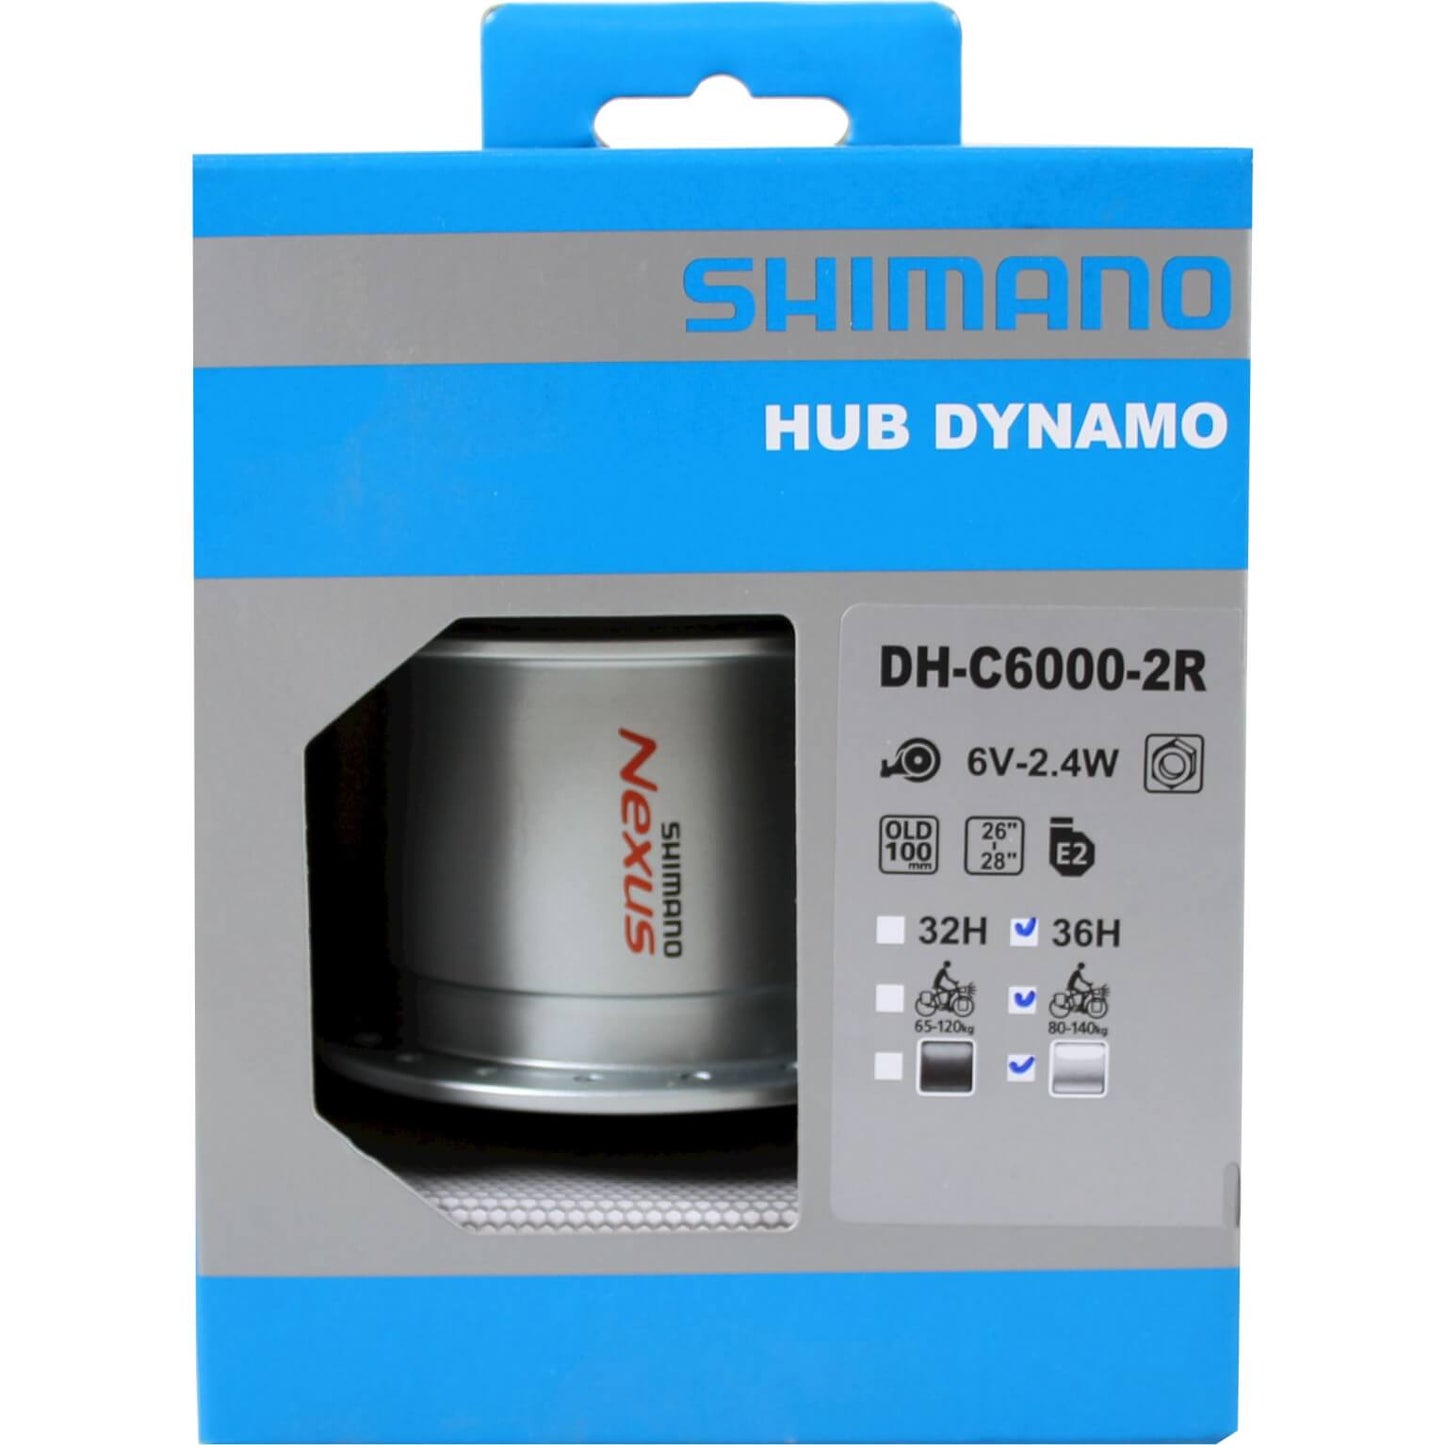 Shimano Hub Dynamo RollerBrake DH-C6000 6V 2.4W